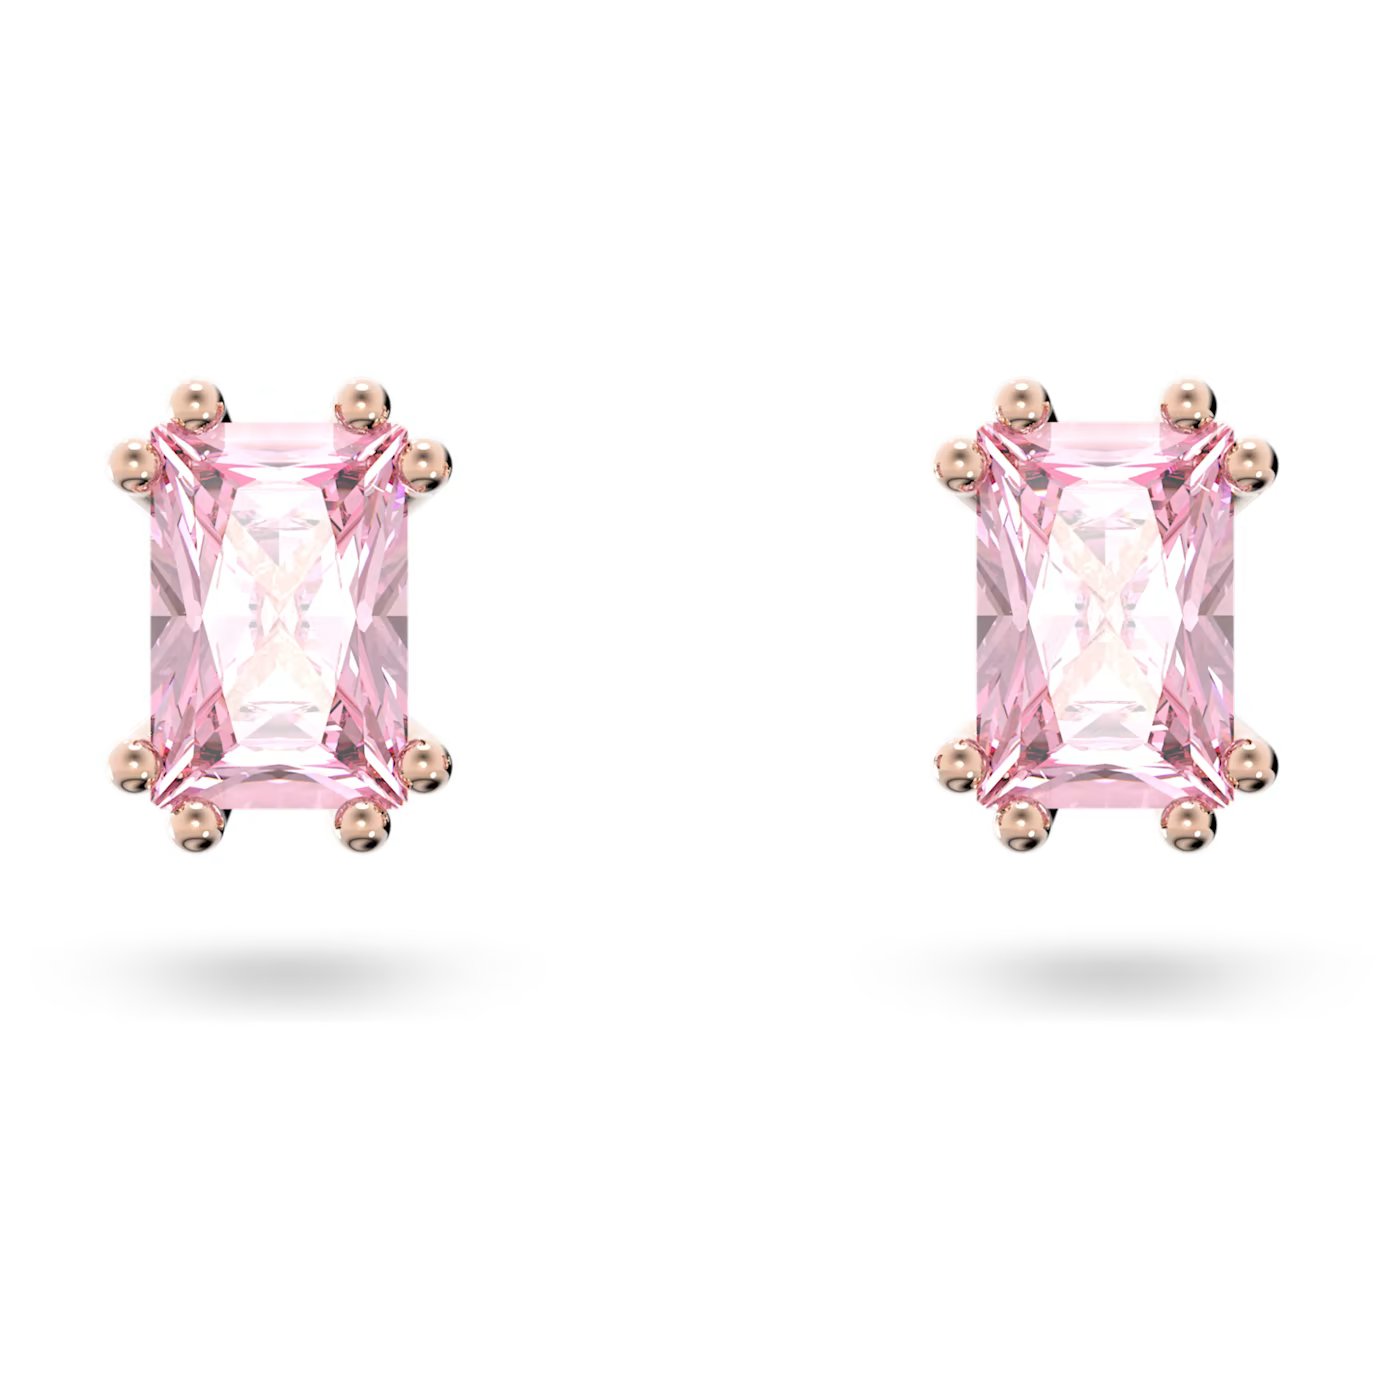 6331aa3c5d00b_px-stilla-stud-earrings--cushion-cut--pink--rose-gold-tone-plated-swarovski-5639136.jpg